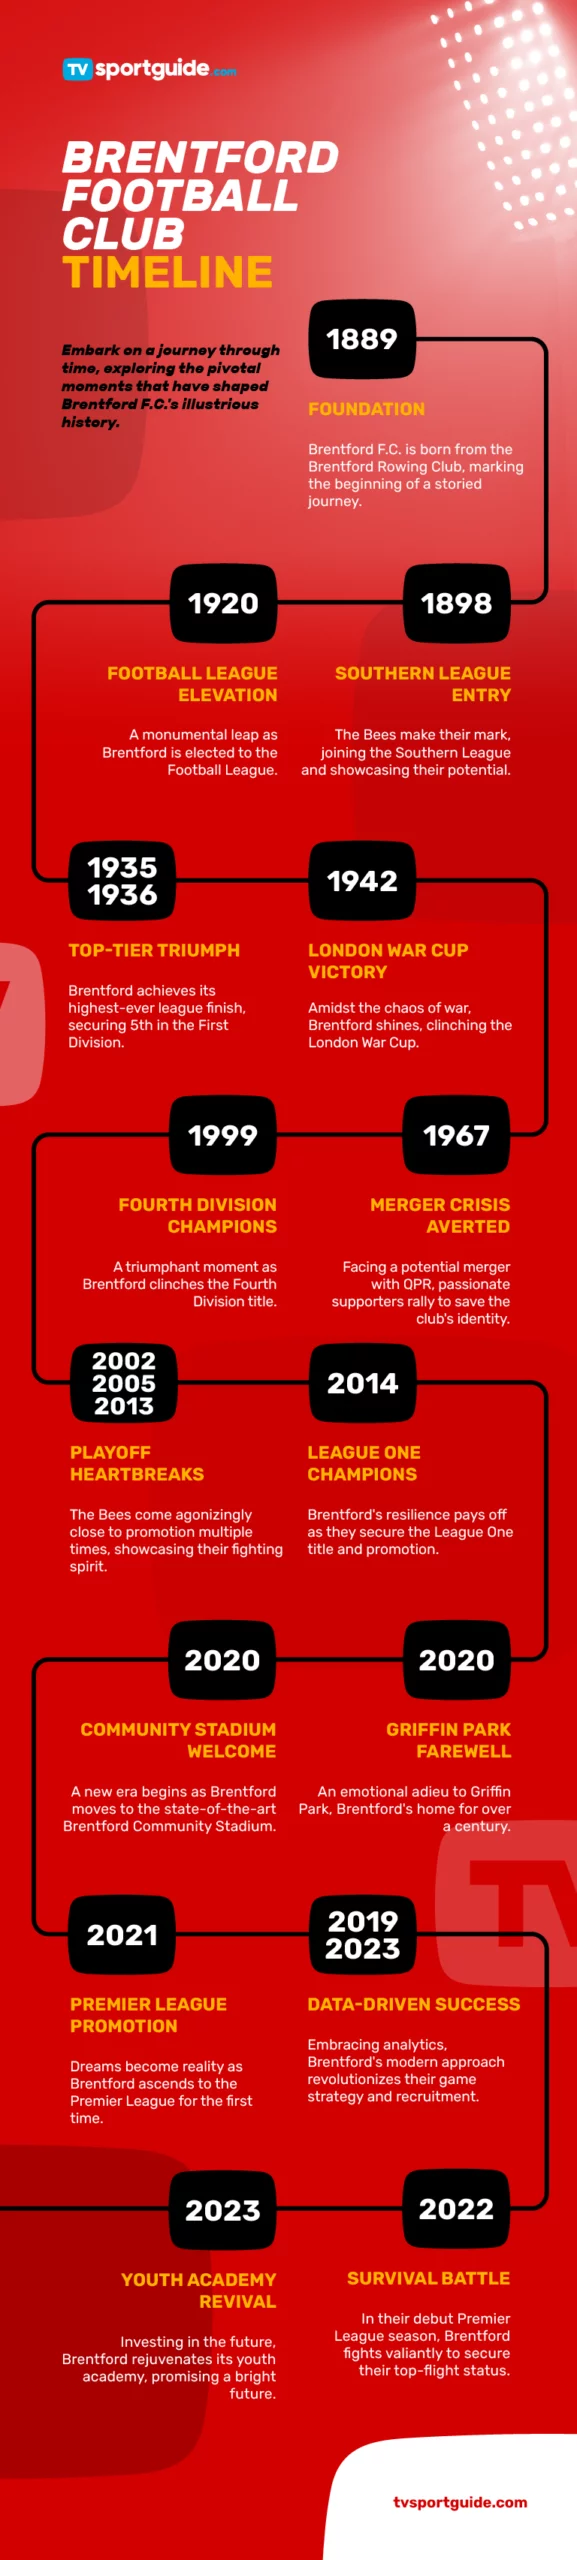 Brentford football club timeline